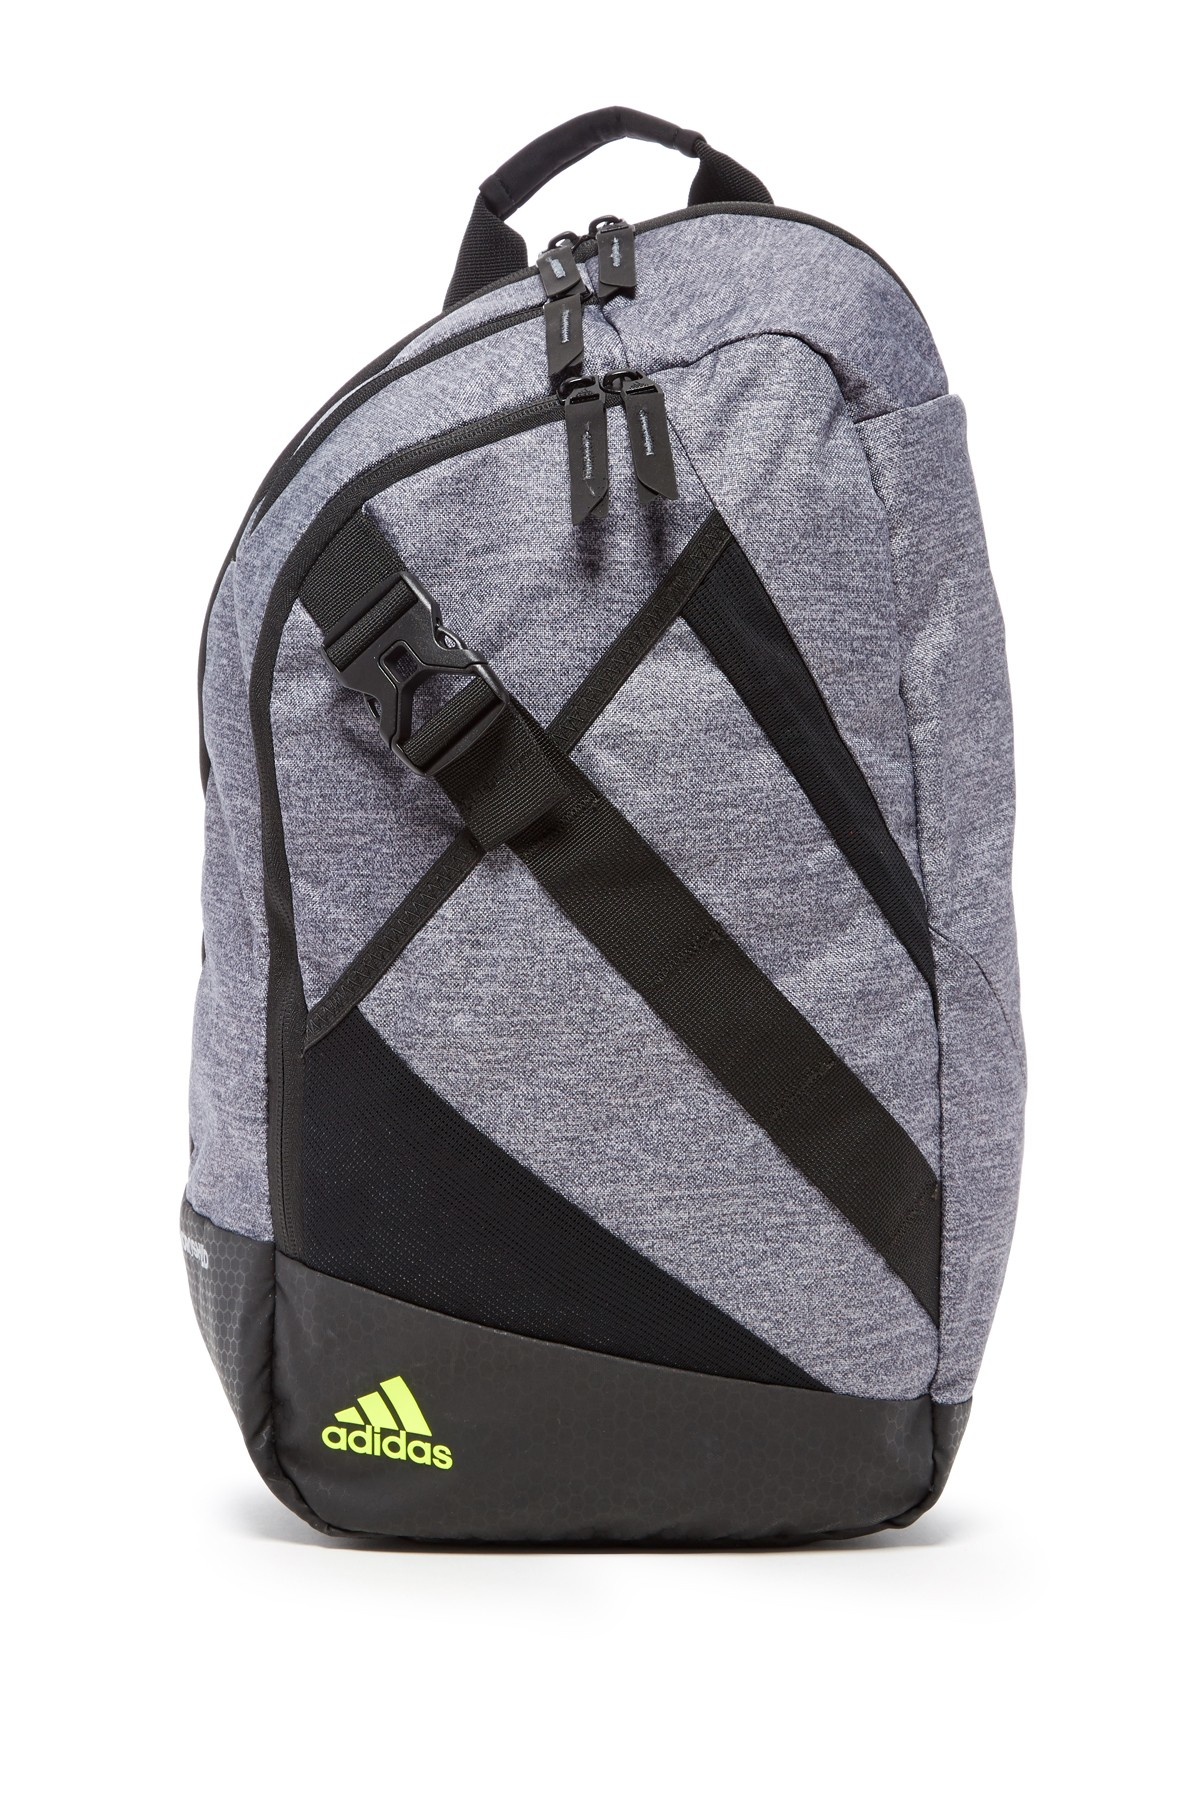 Adidas Capital Sling Backpack | IMT Mines Albi